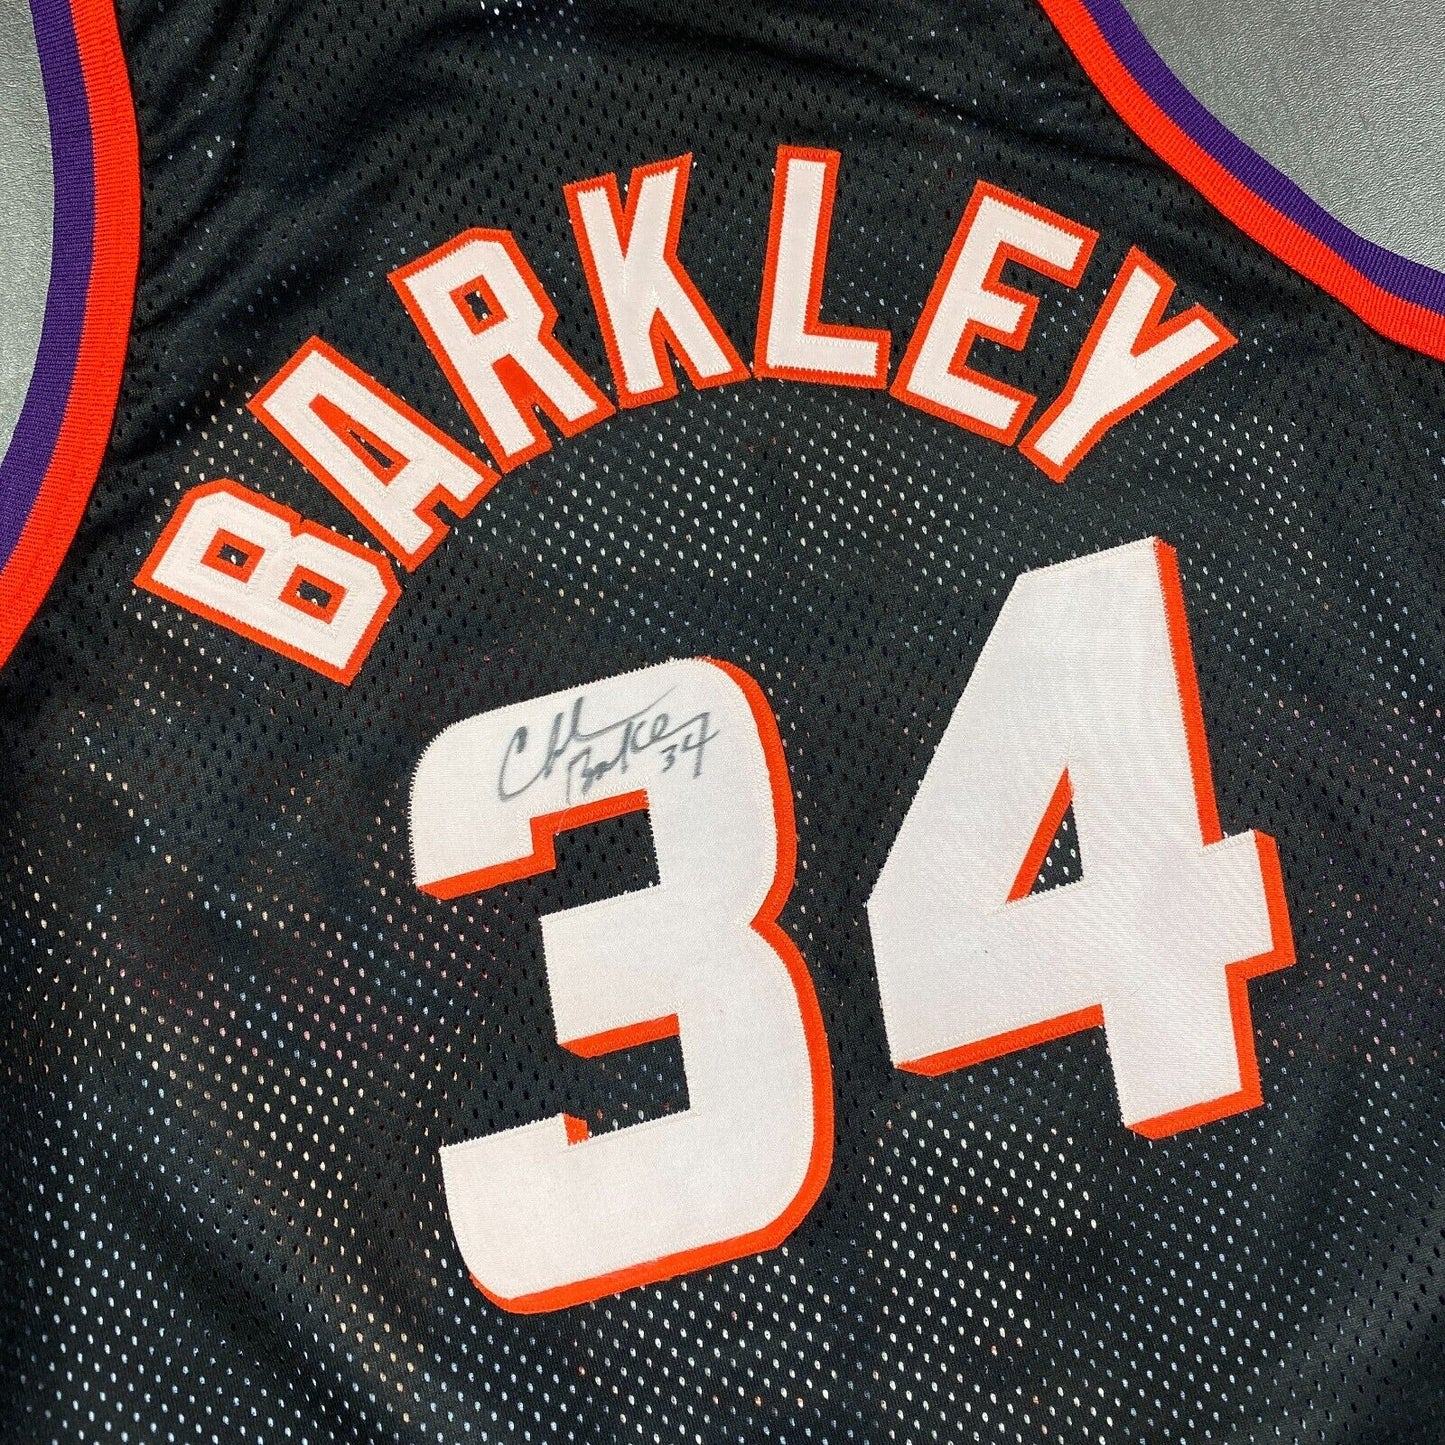 100% Authentic Charles Barkley Signed Vintage Champion Suns Jersey Size 48 JSA